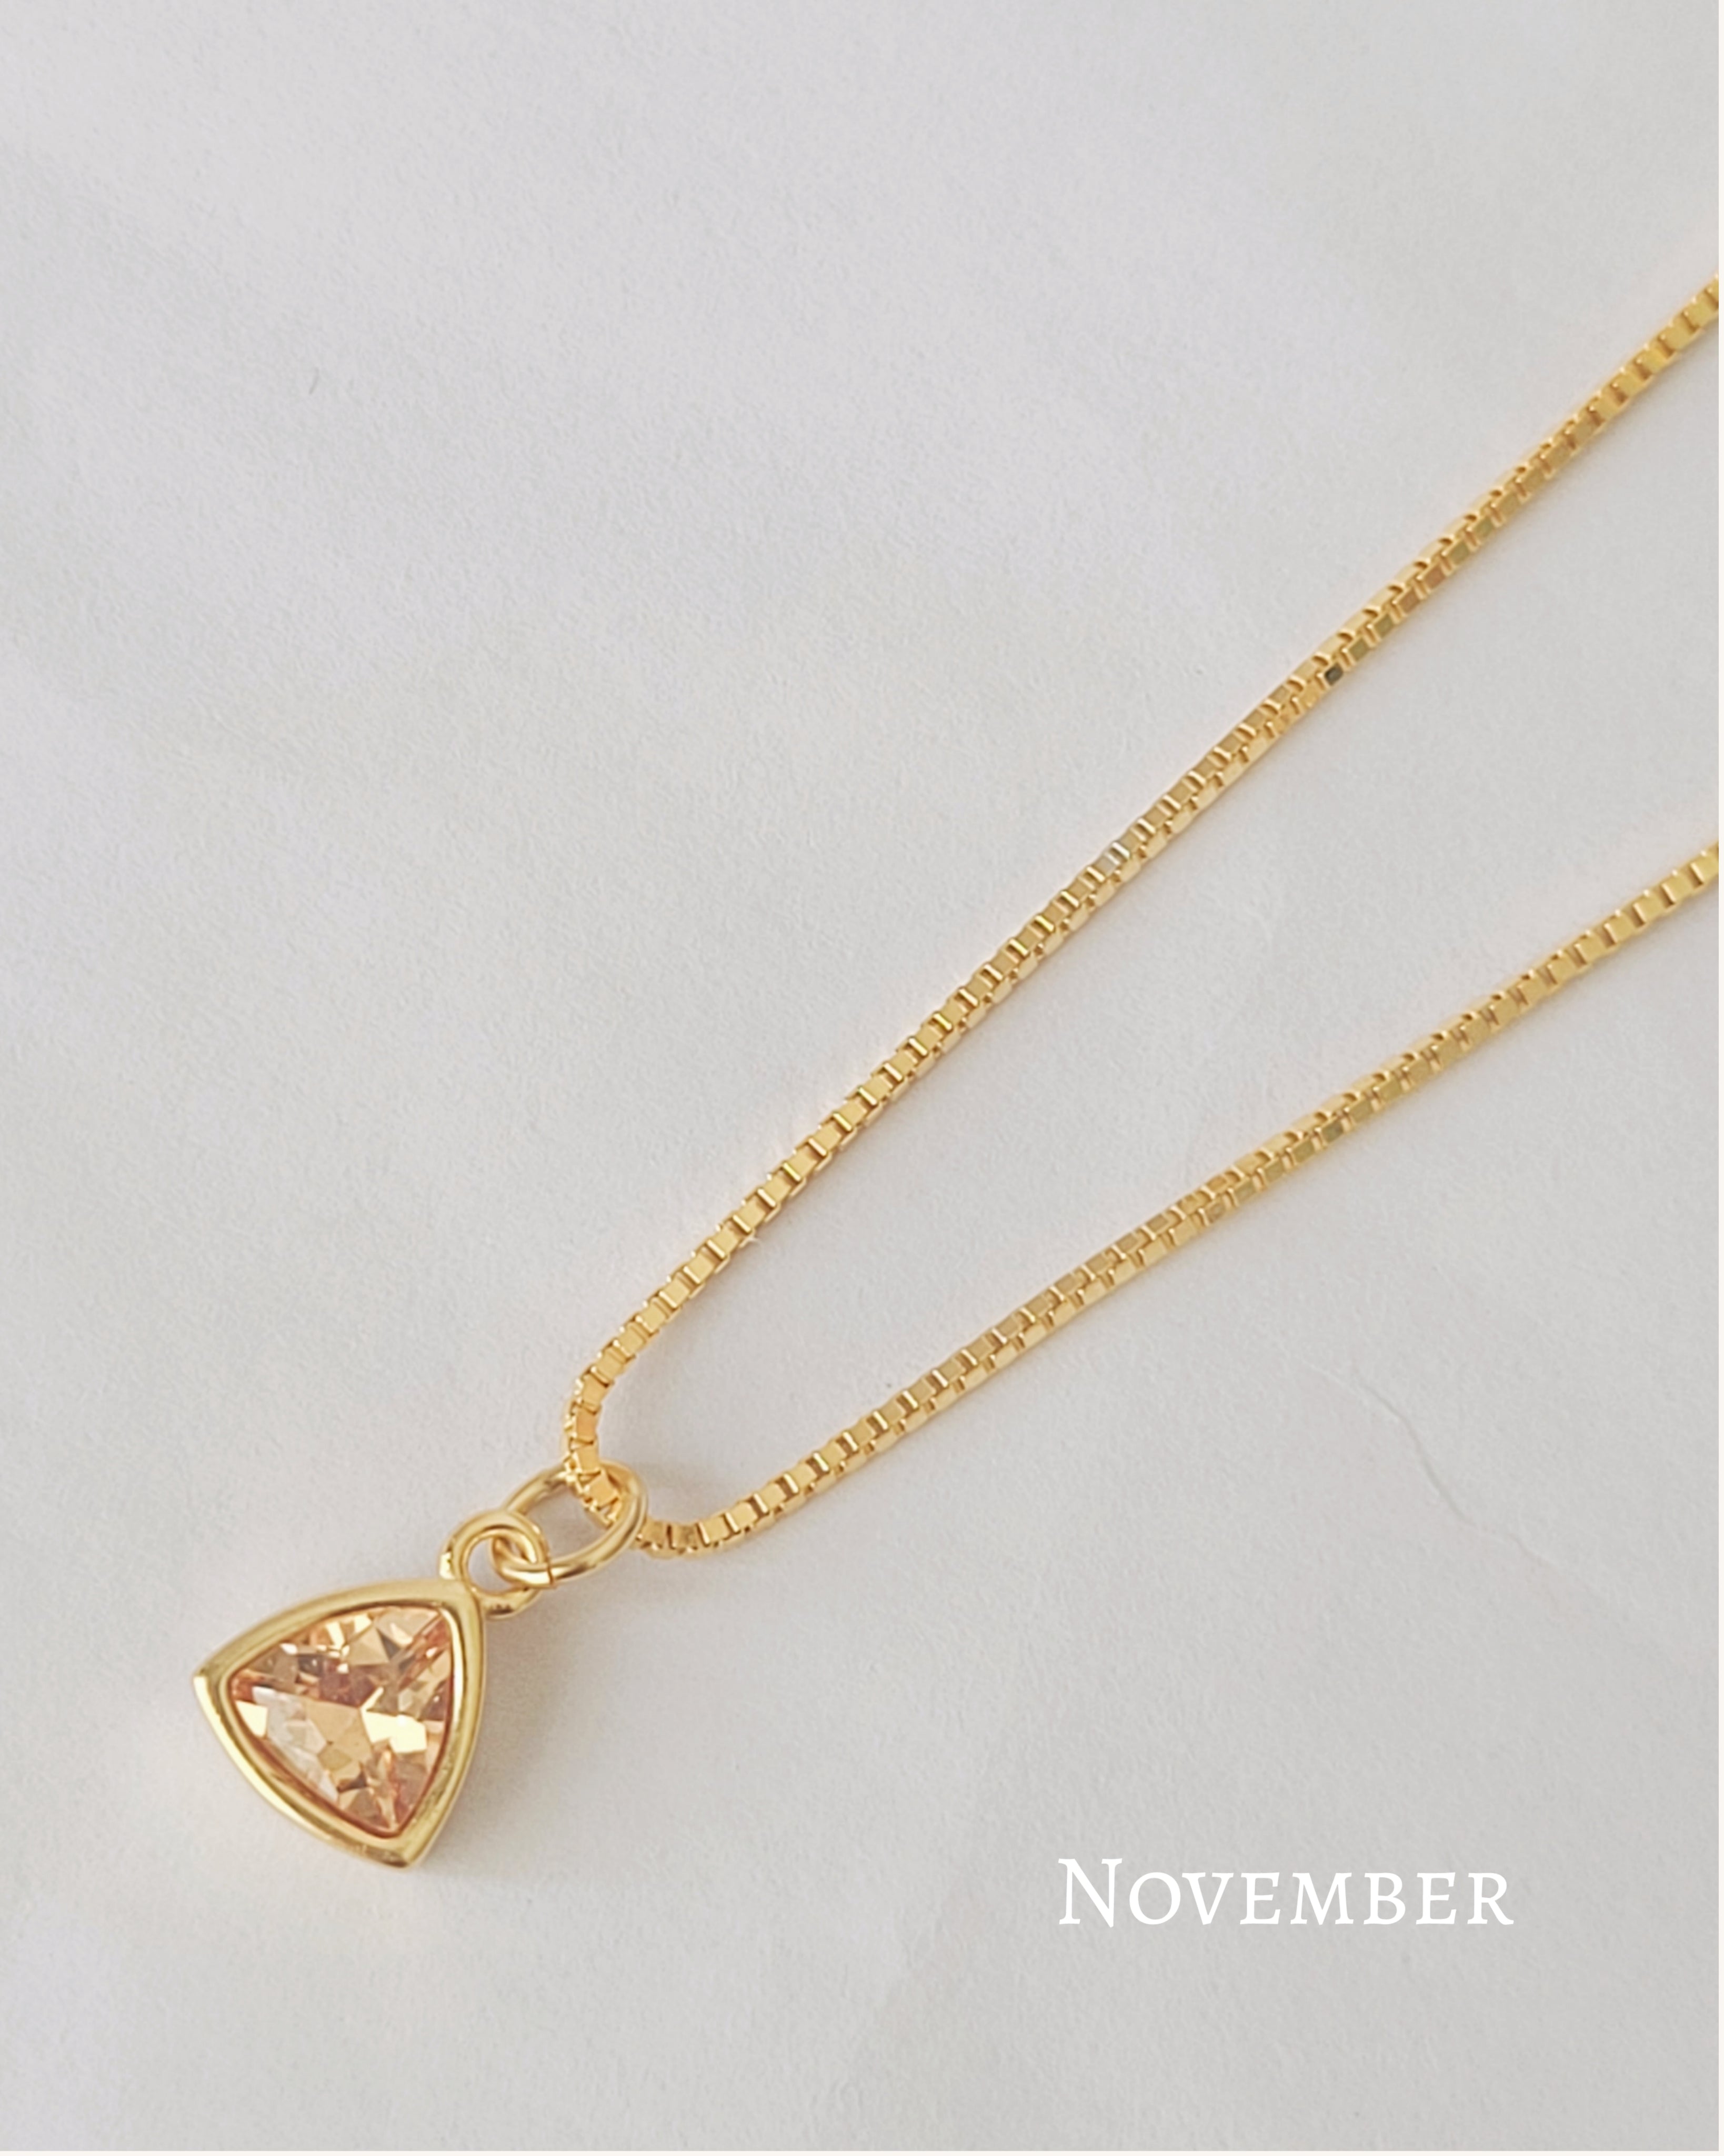 November birthstone necklace 